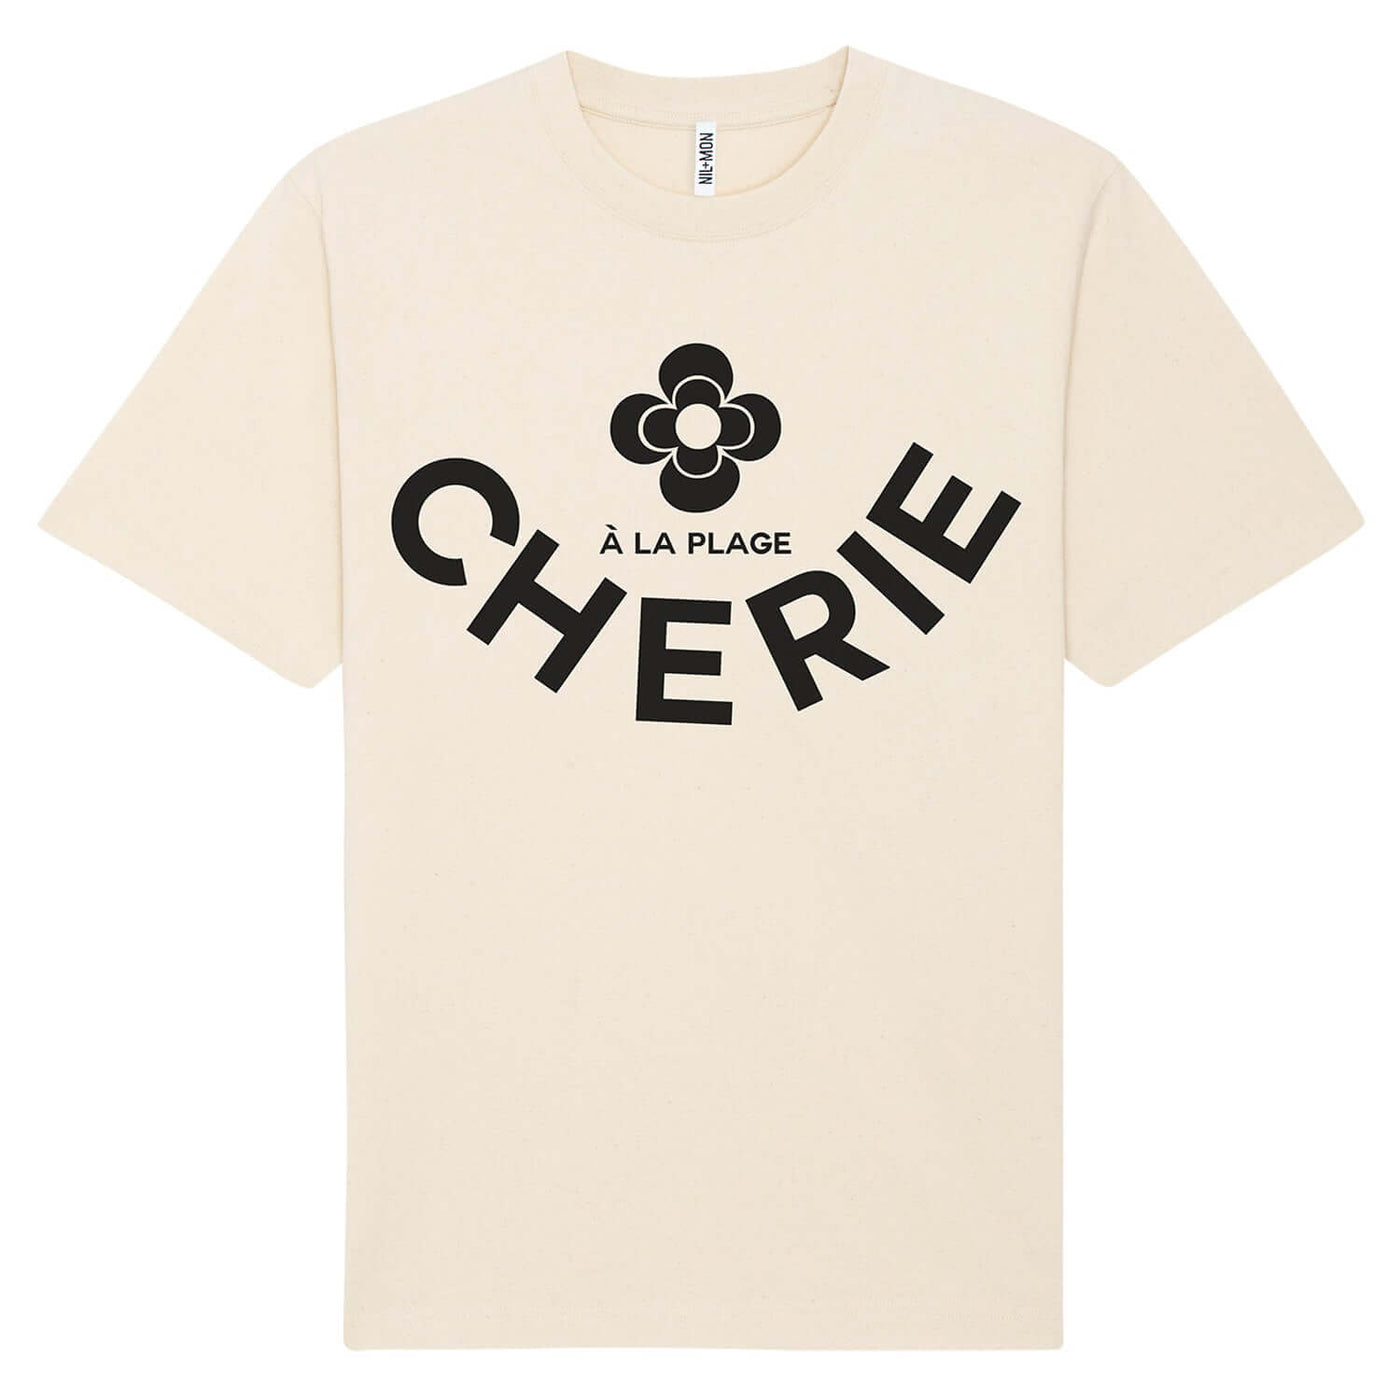 XXL Beach Shirt "Cherie" - creme